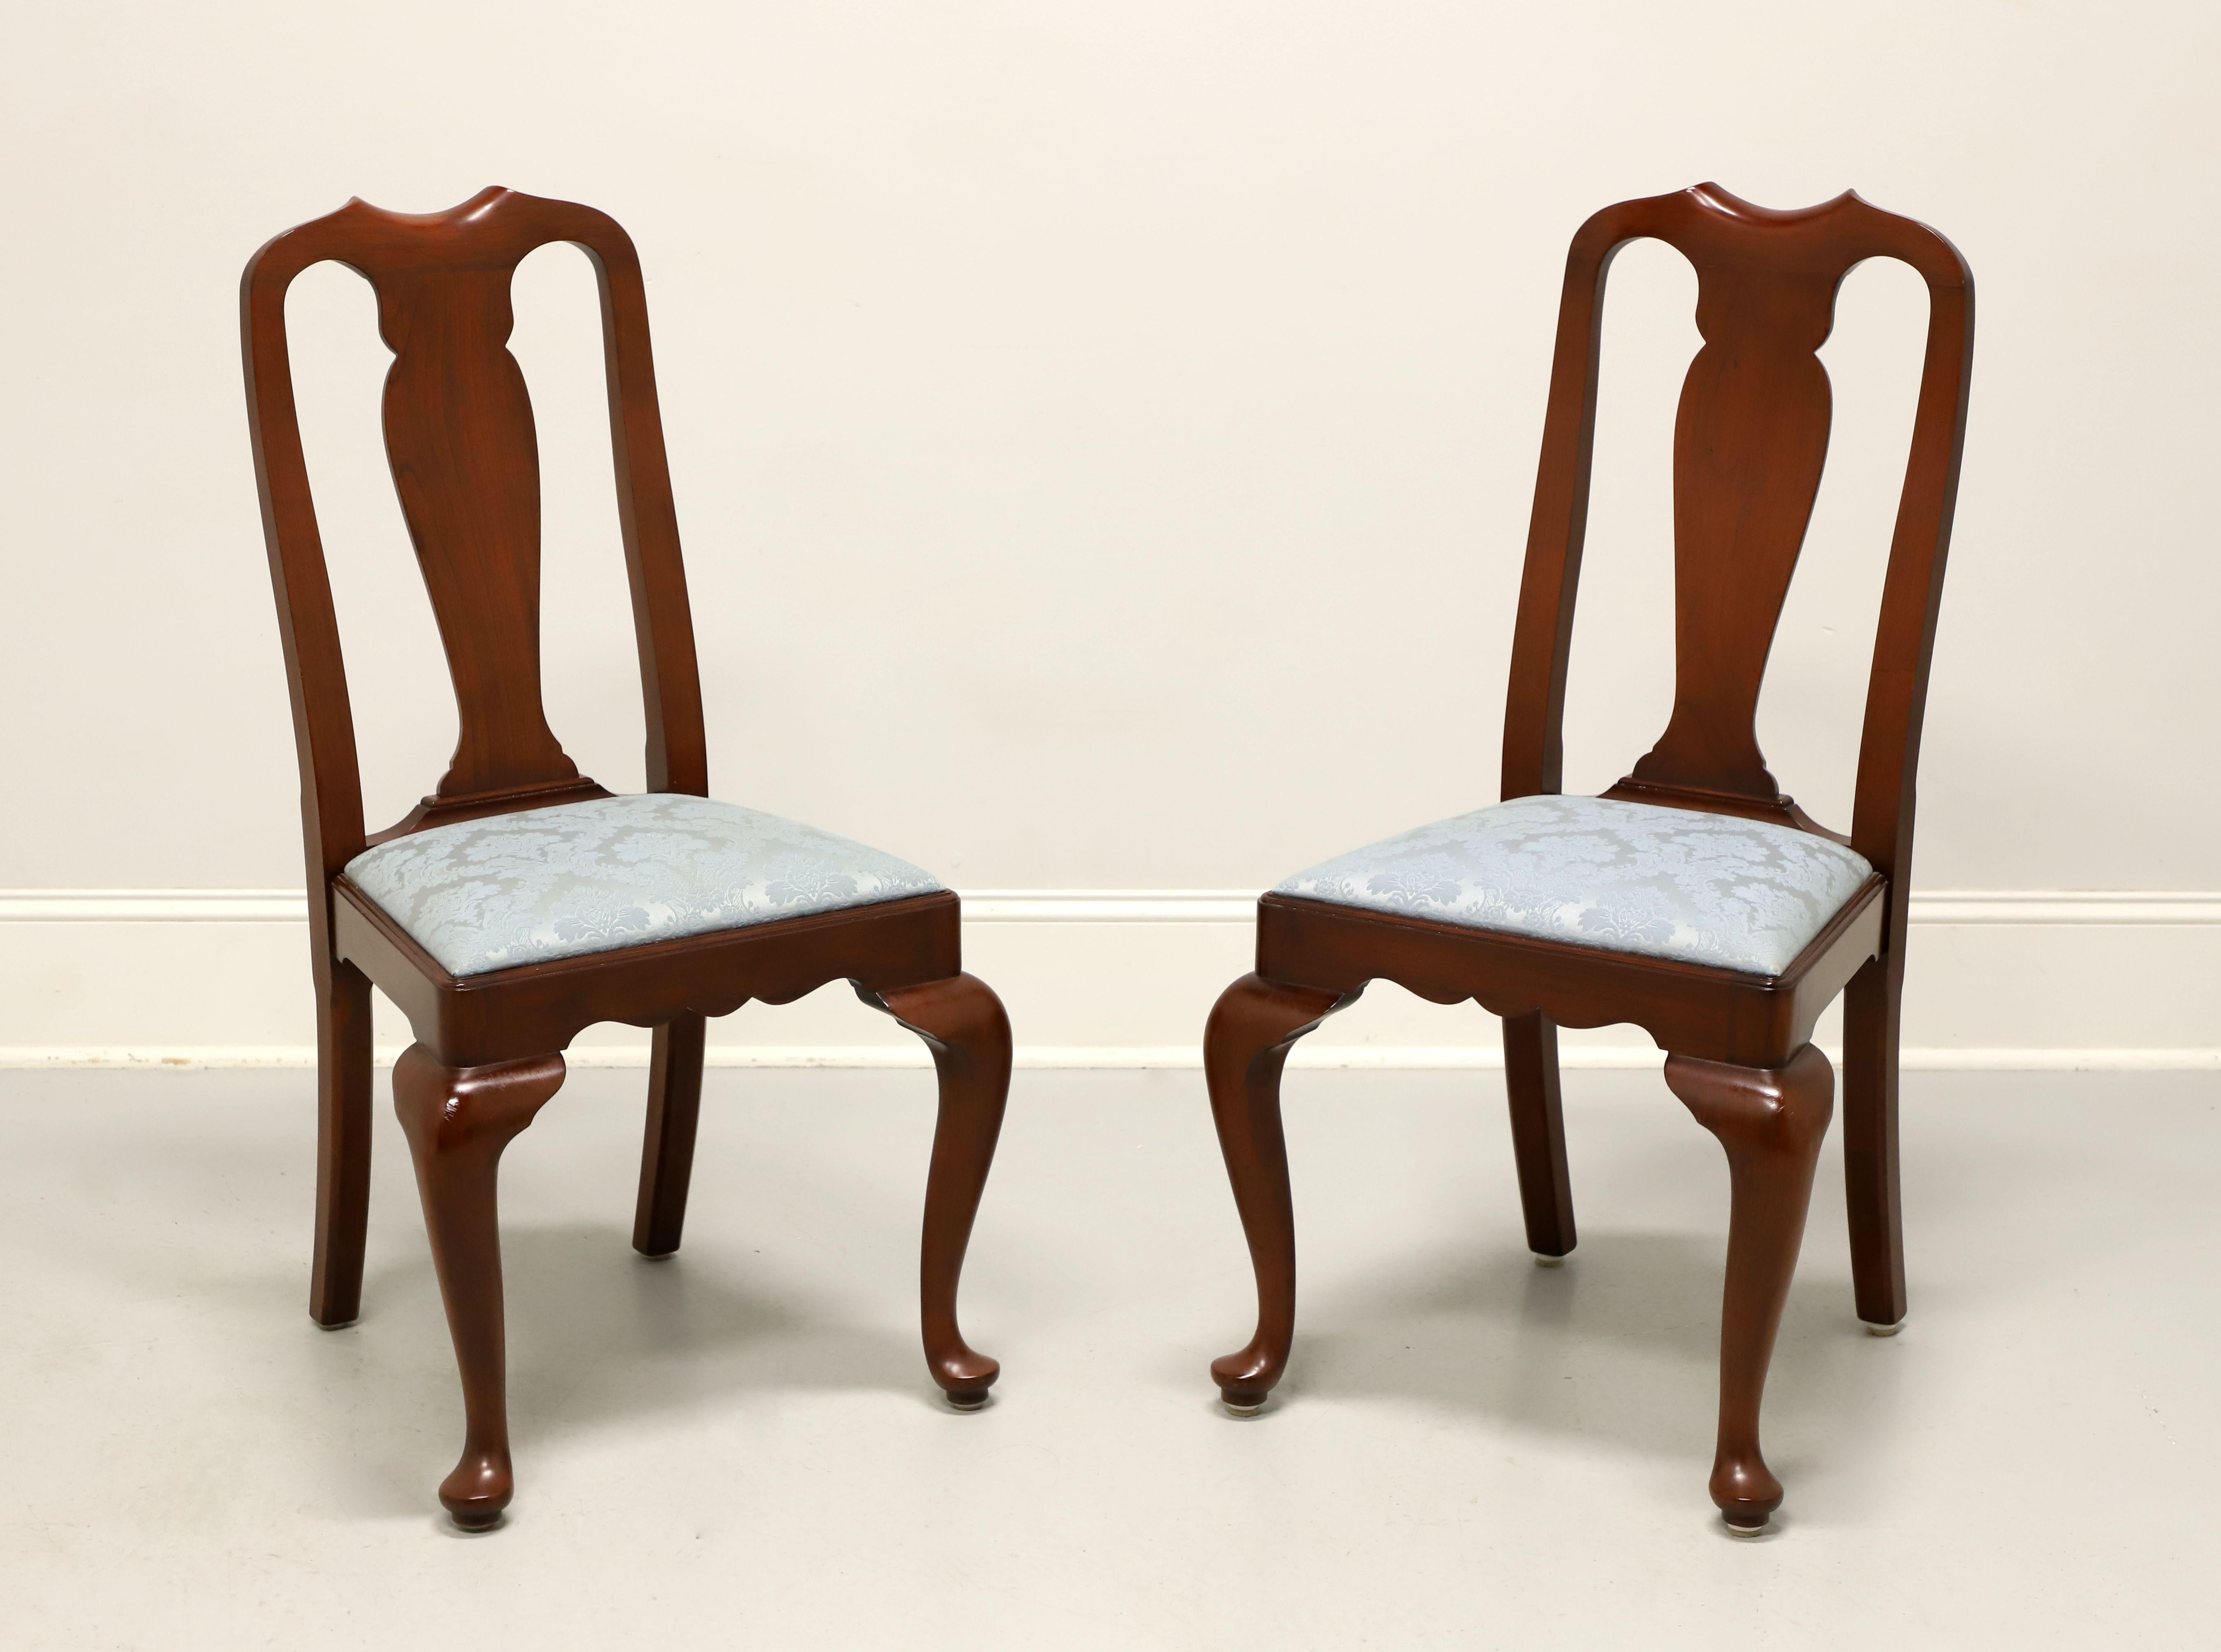 HENKEL HARRIS 109S 24 Wild Black Cherry Queen Anne Dining Side Chairs - Pair A 7